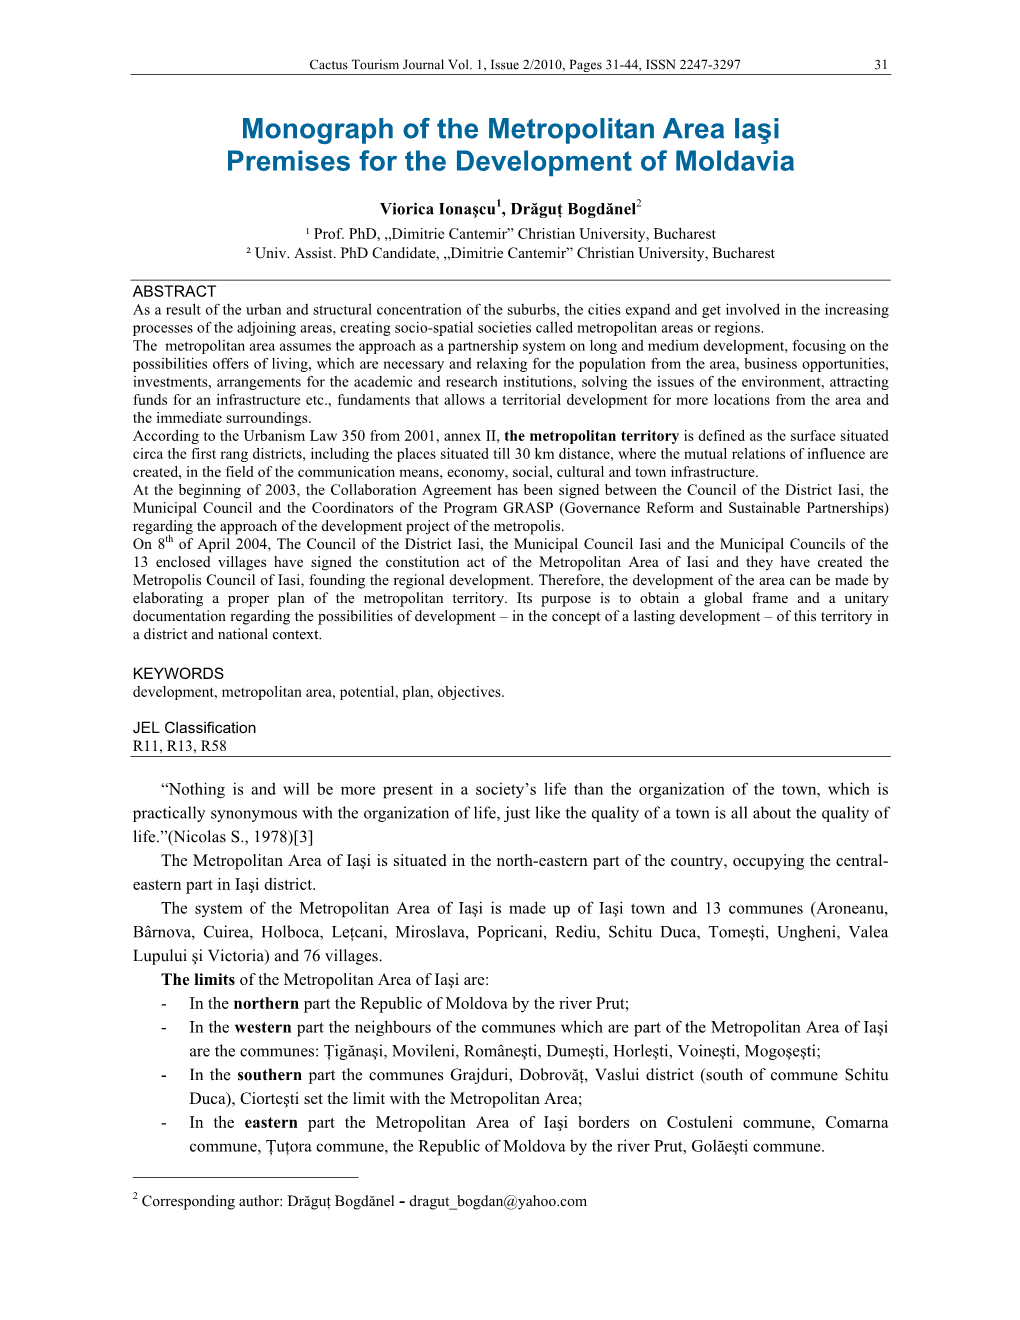 Monograph of the Metropolitan Area Iaşi Premises for the Development of Moldavia